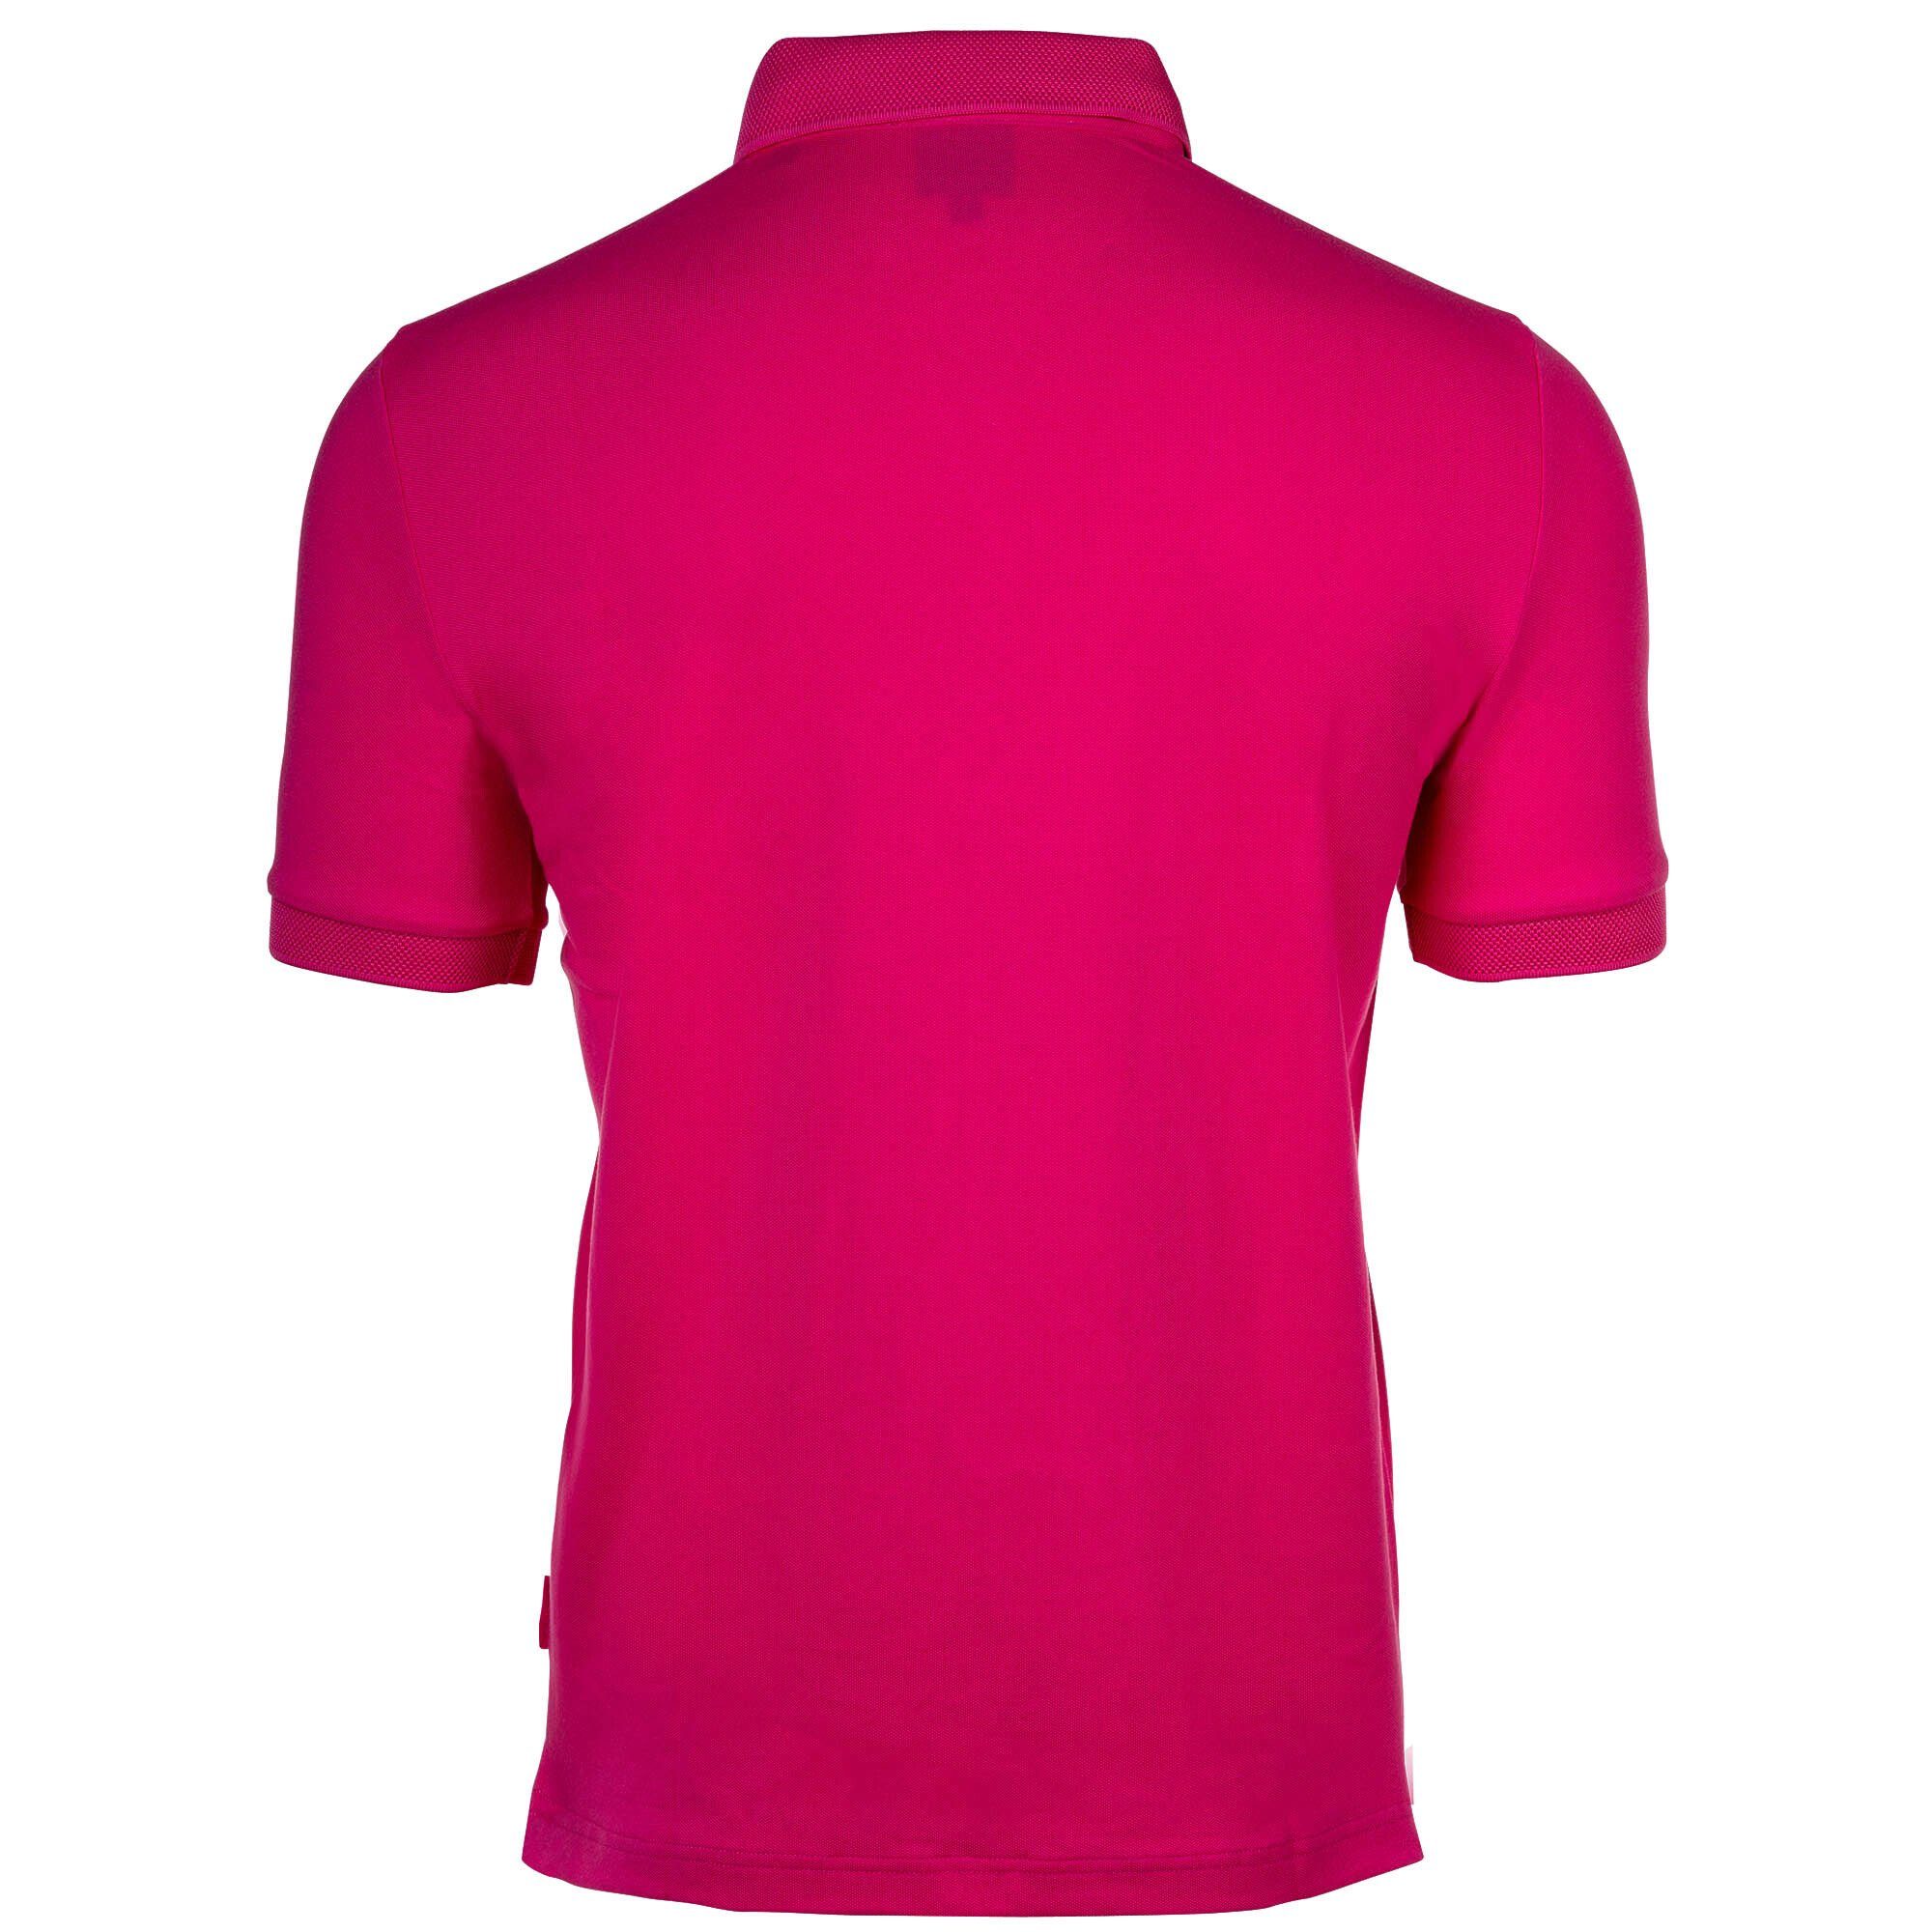 Poloshirt Herren ARMANI Slim Pink fit, Poloshirt EXCHANGE - Cotton einfarbig,